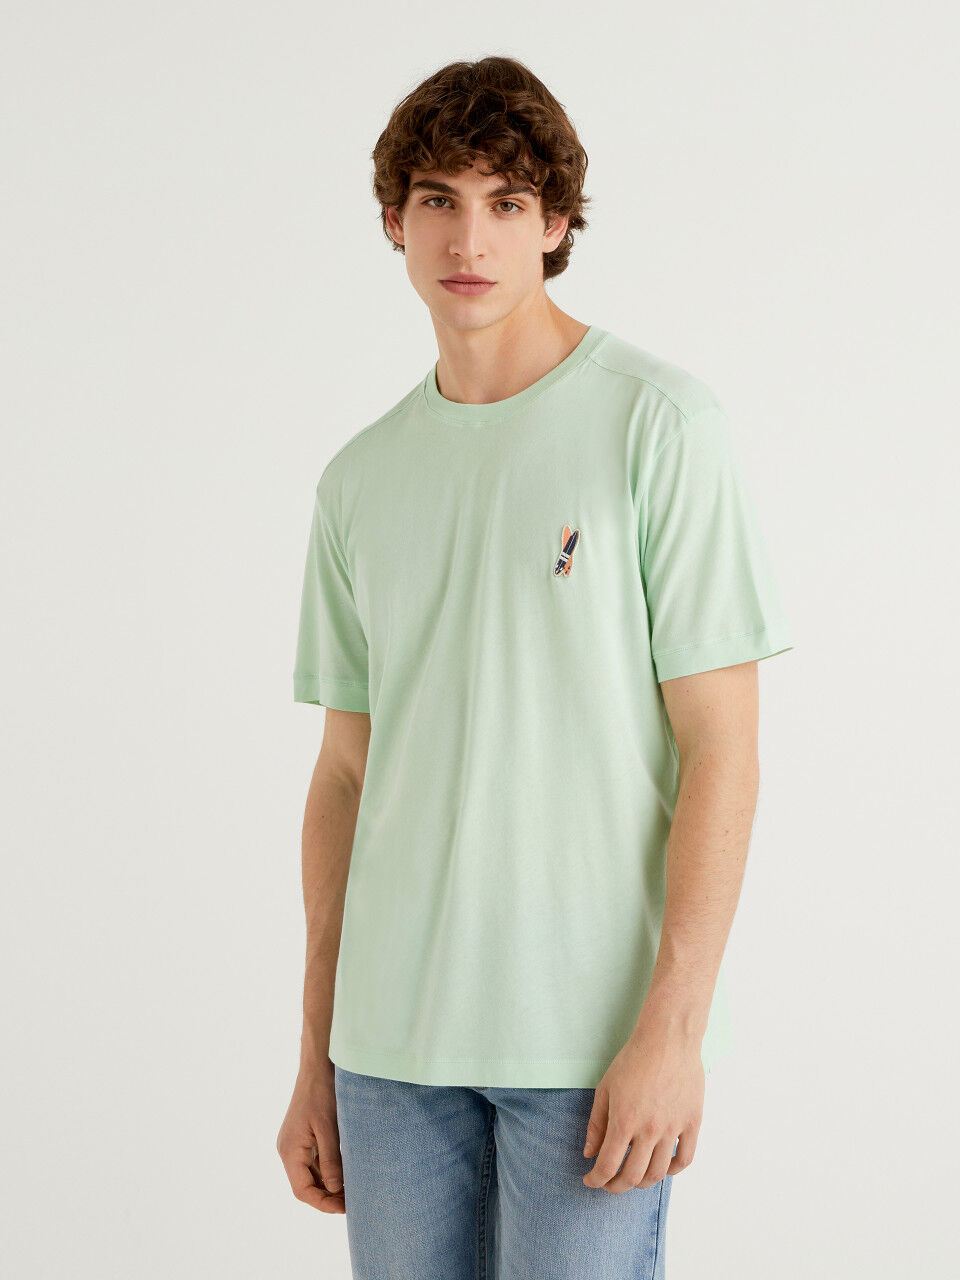 T-Shirt Mens Crew Neck Short-Sleeve Member Login Hall of Fame Tee Shirts Loose-Fi Cotton Shirts Custom Tops